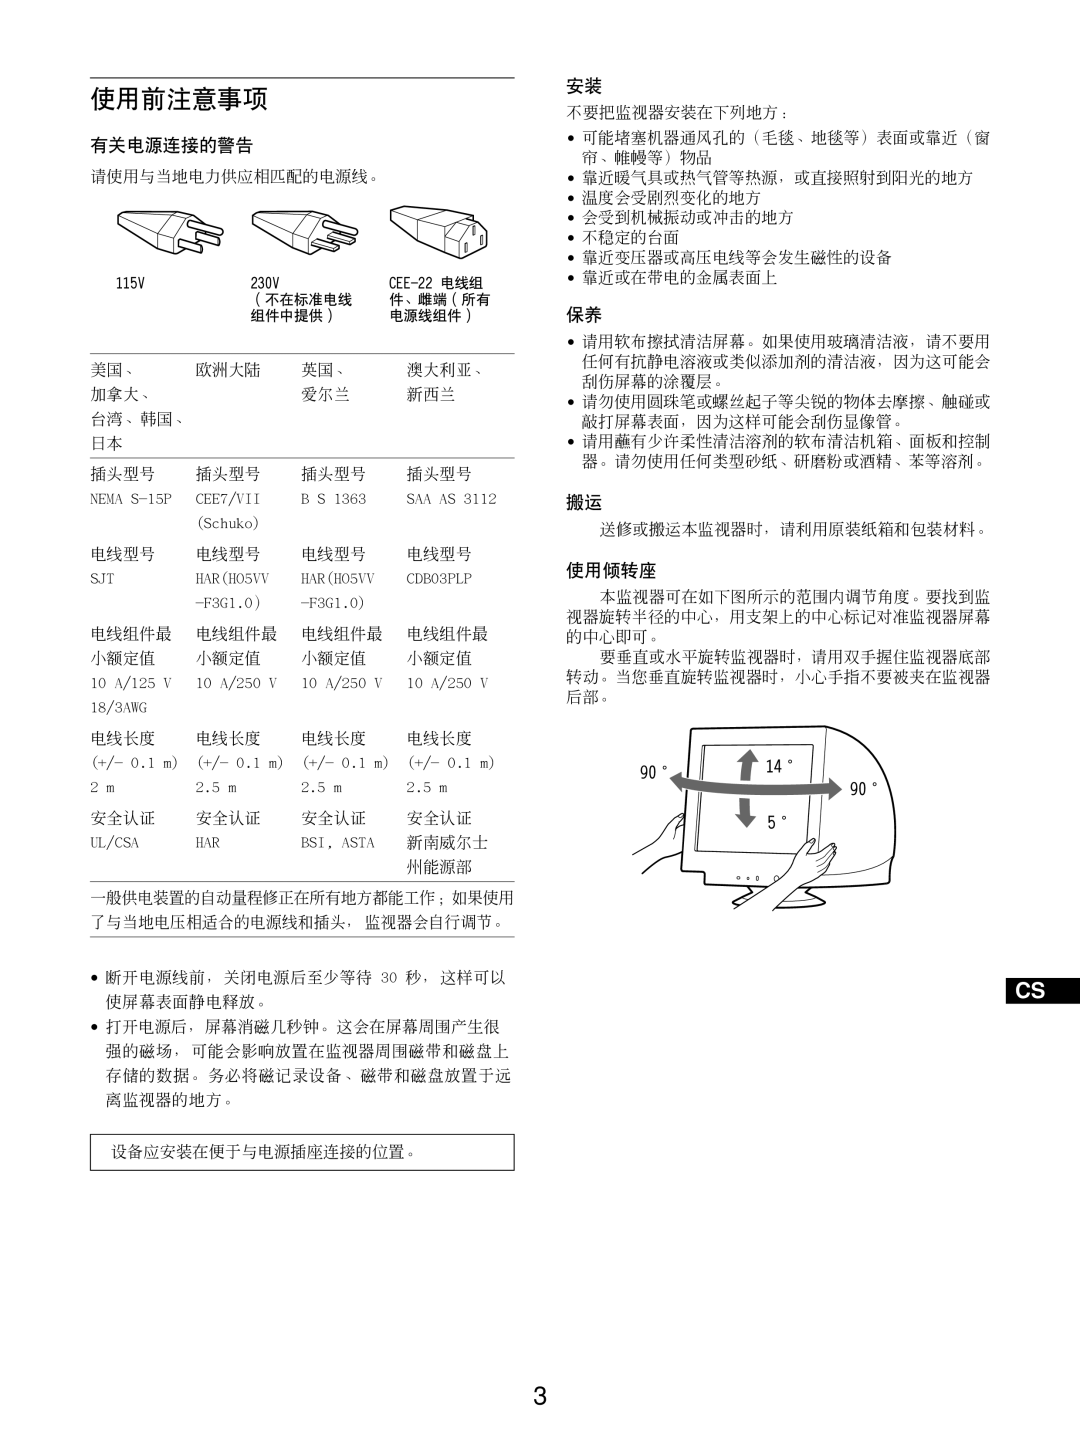 Sony GDM-5510 operating instructions 使用前注意事项, 有关电源连接的警告, 使用倾转座 